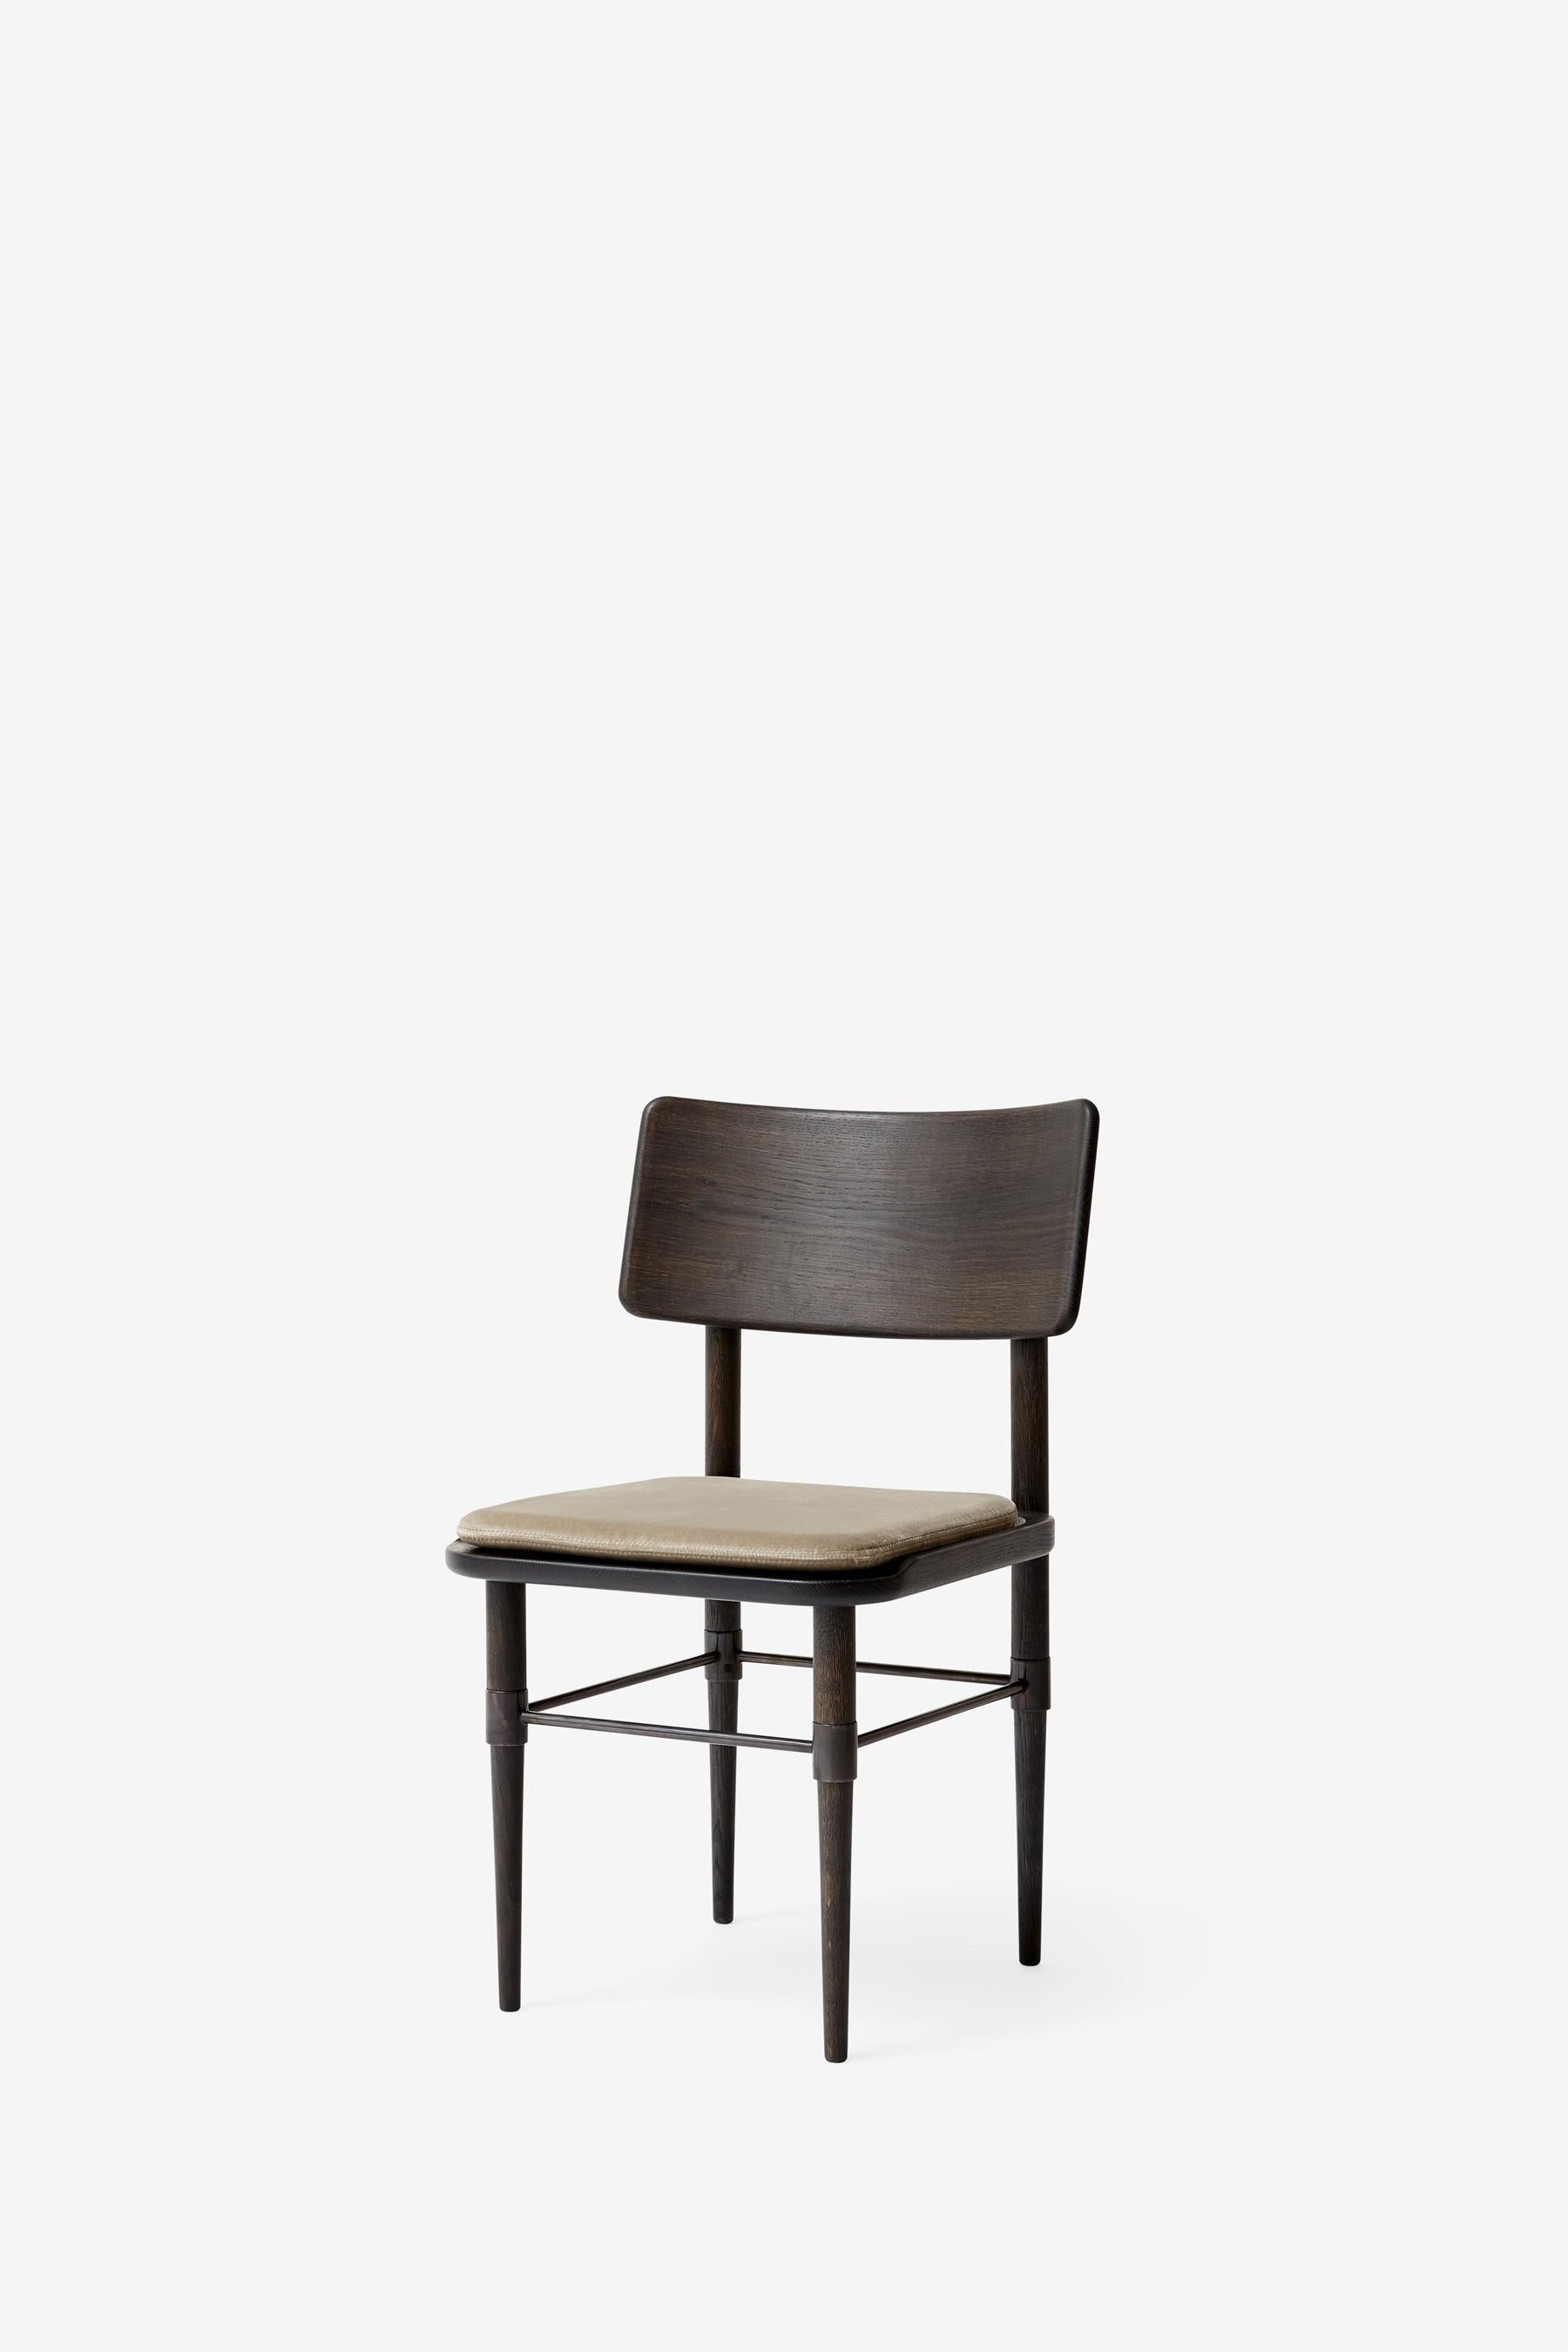 MG101 Dining chair in dark oak by Malte Gormsen Design by Space Copenhagen For Sale 5